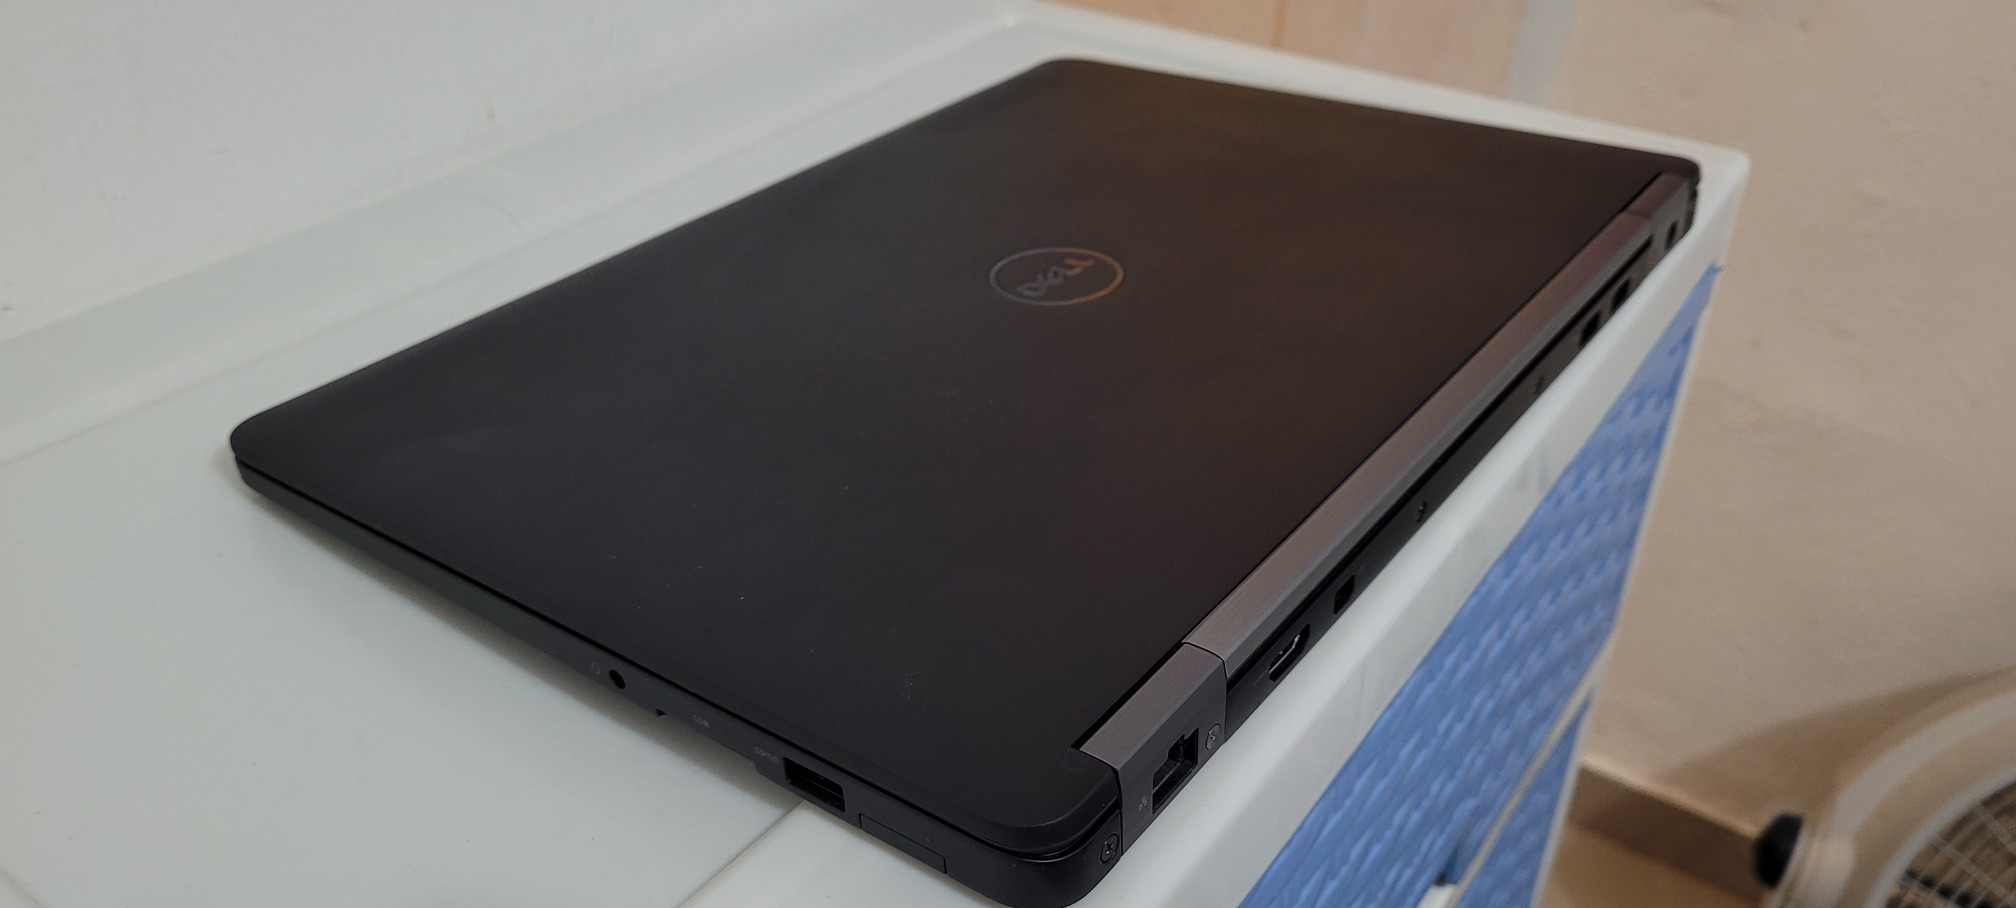 computadoras y laptops - Dell Slim 7480 14 Pulg Core i5 7ma Ram 8gb ddr4 Disco 128gb SSD Solido 2